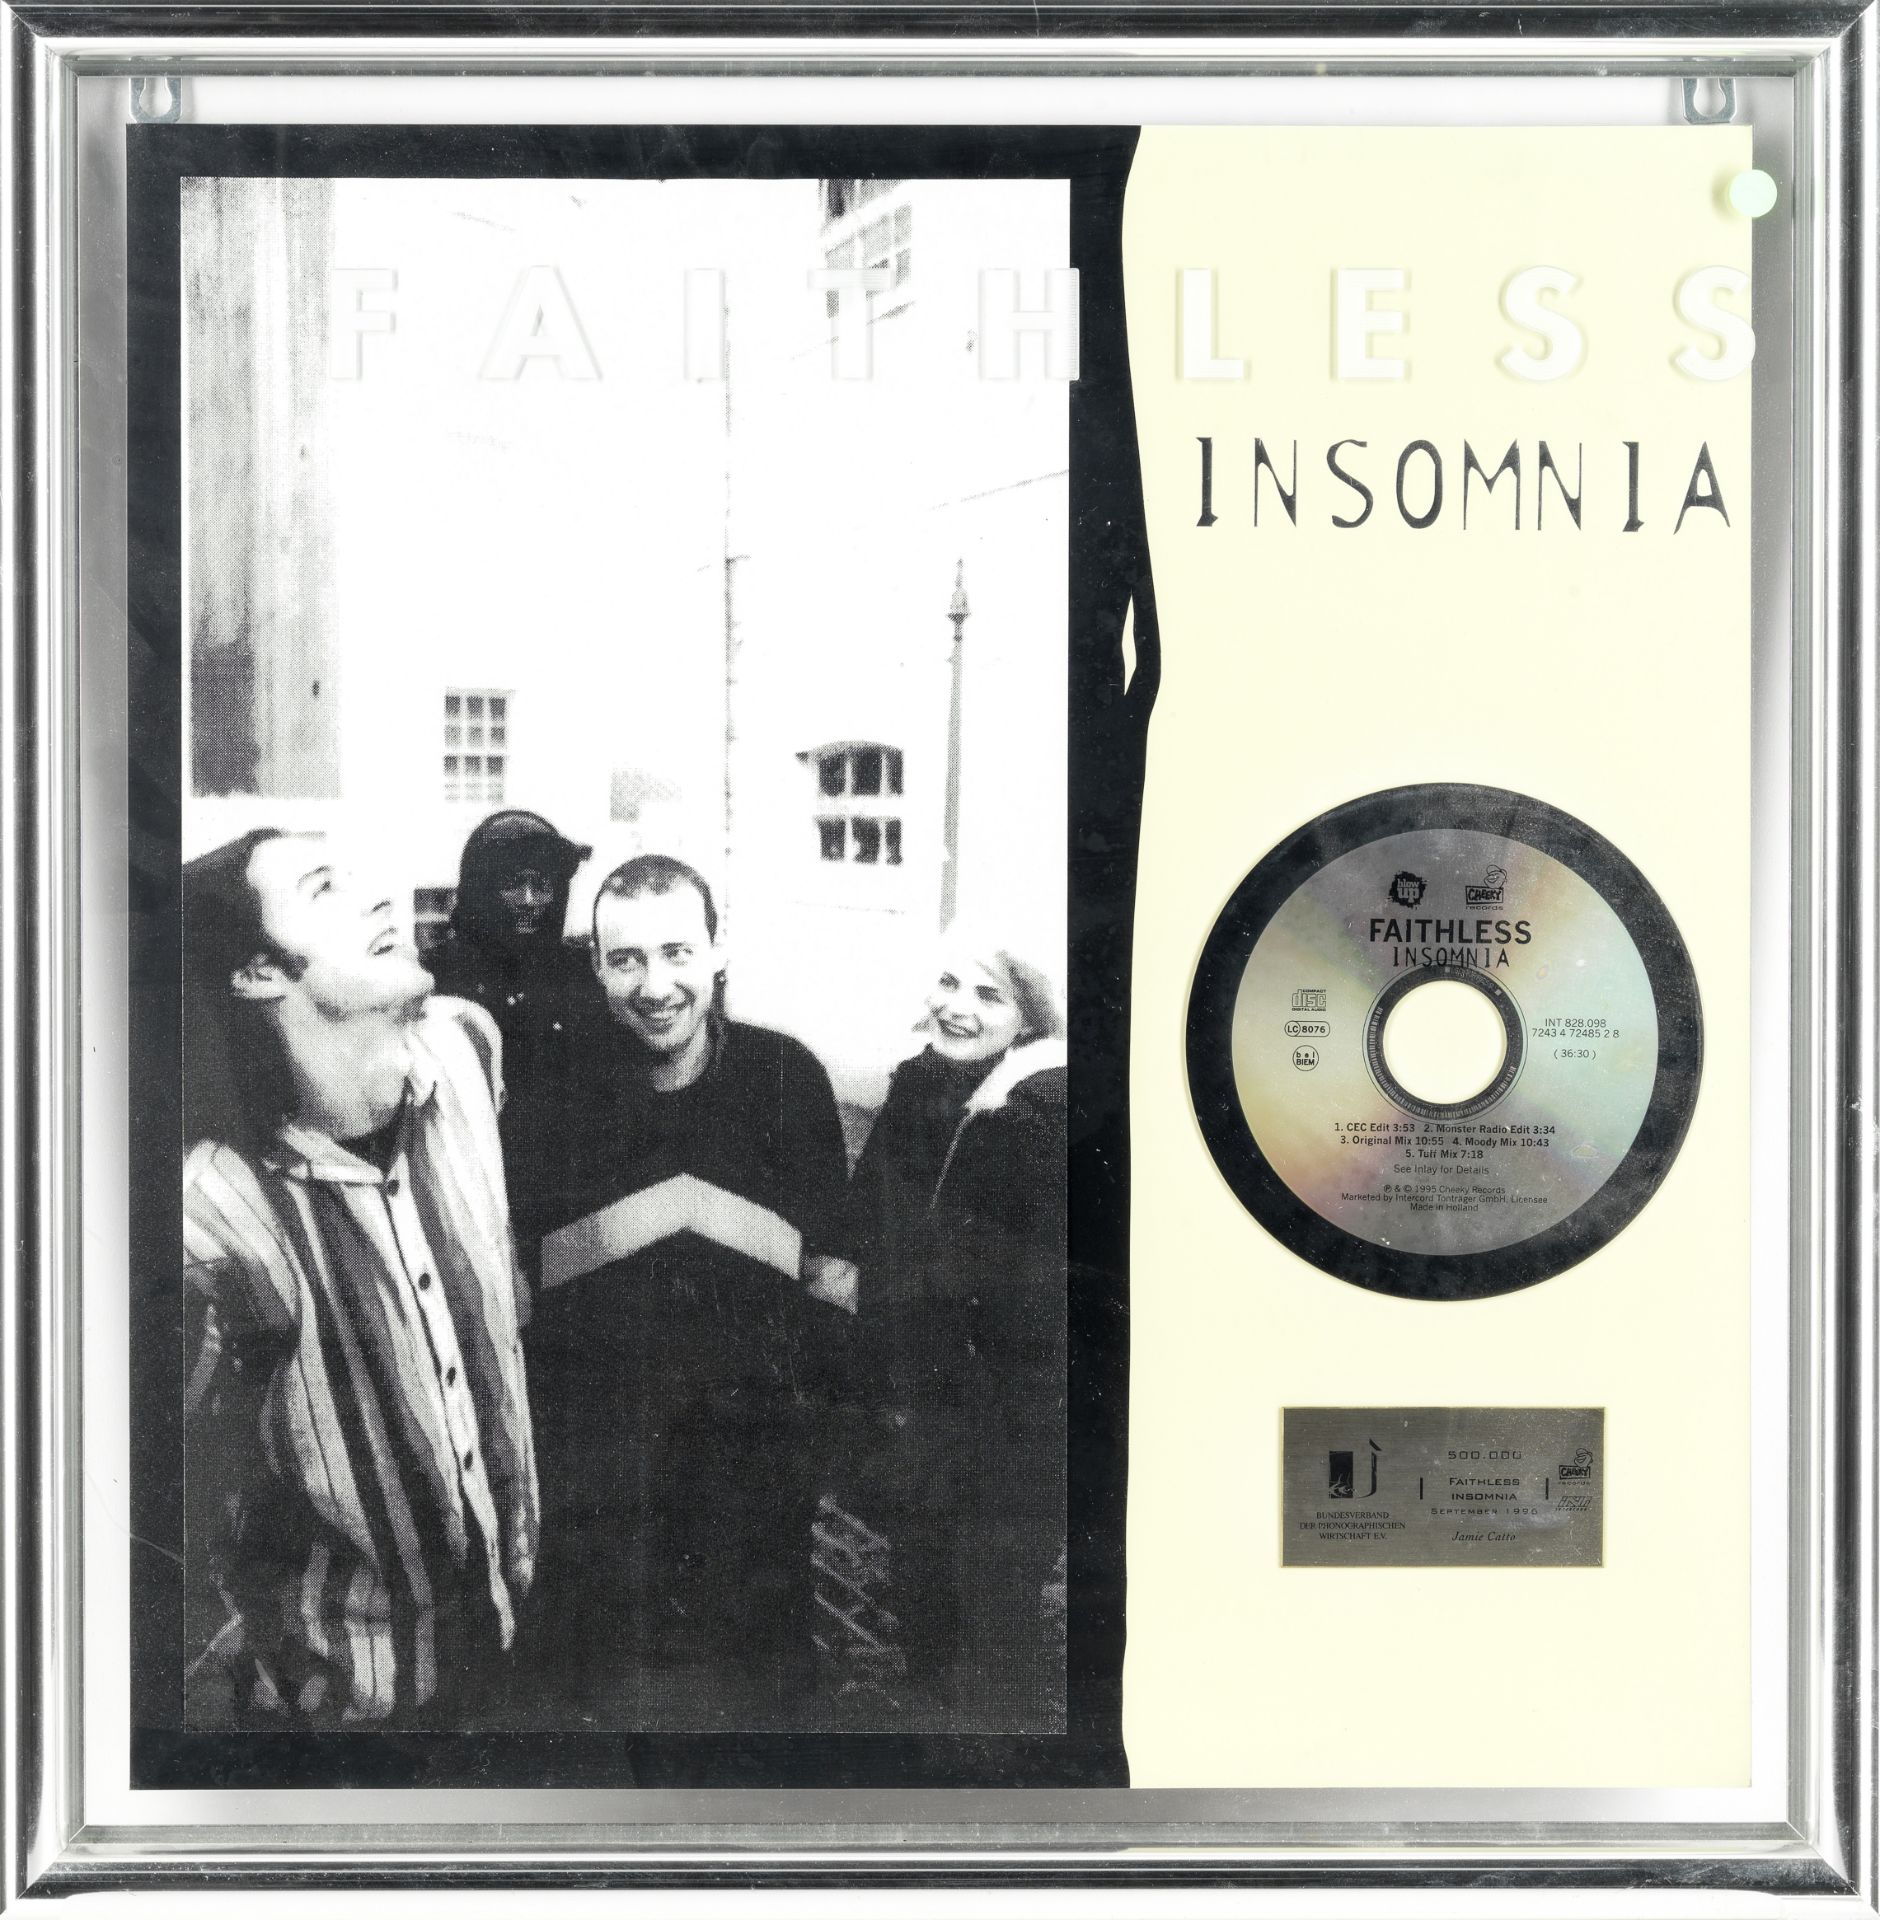 Faithless: A German BVMI 'platinum' award for the single Insomnia, November 1995,